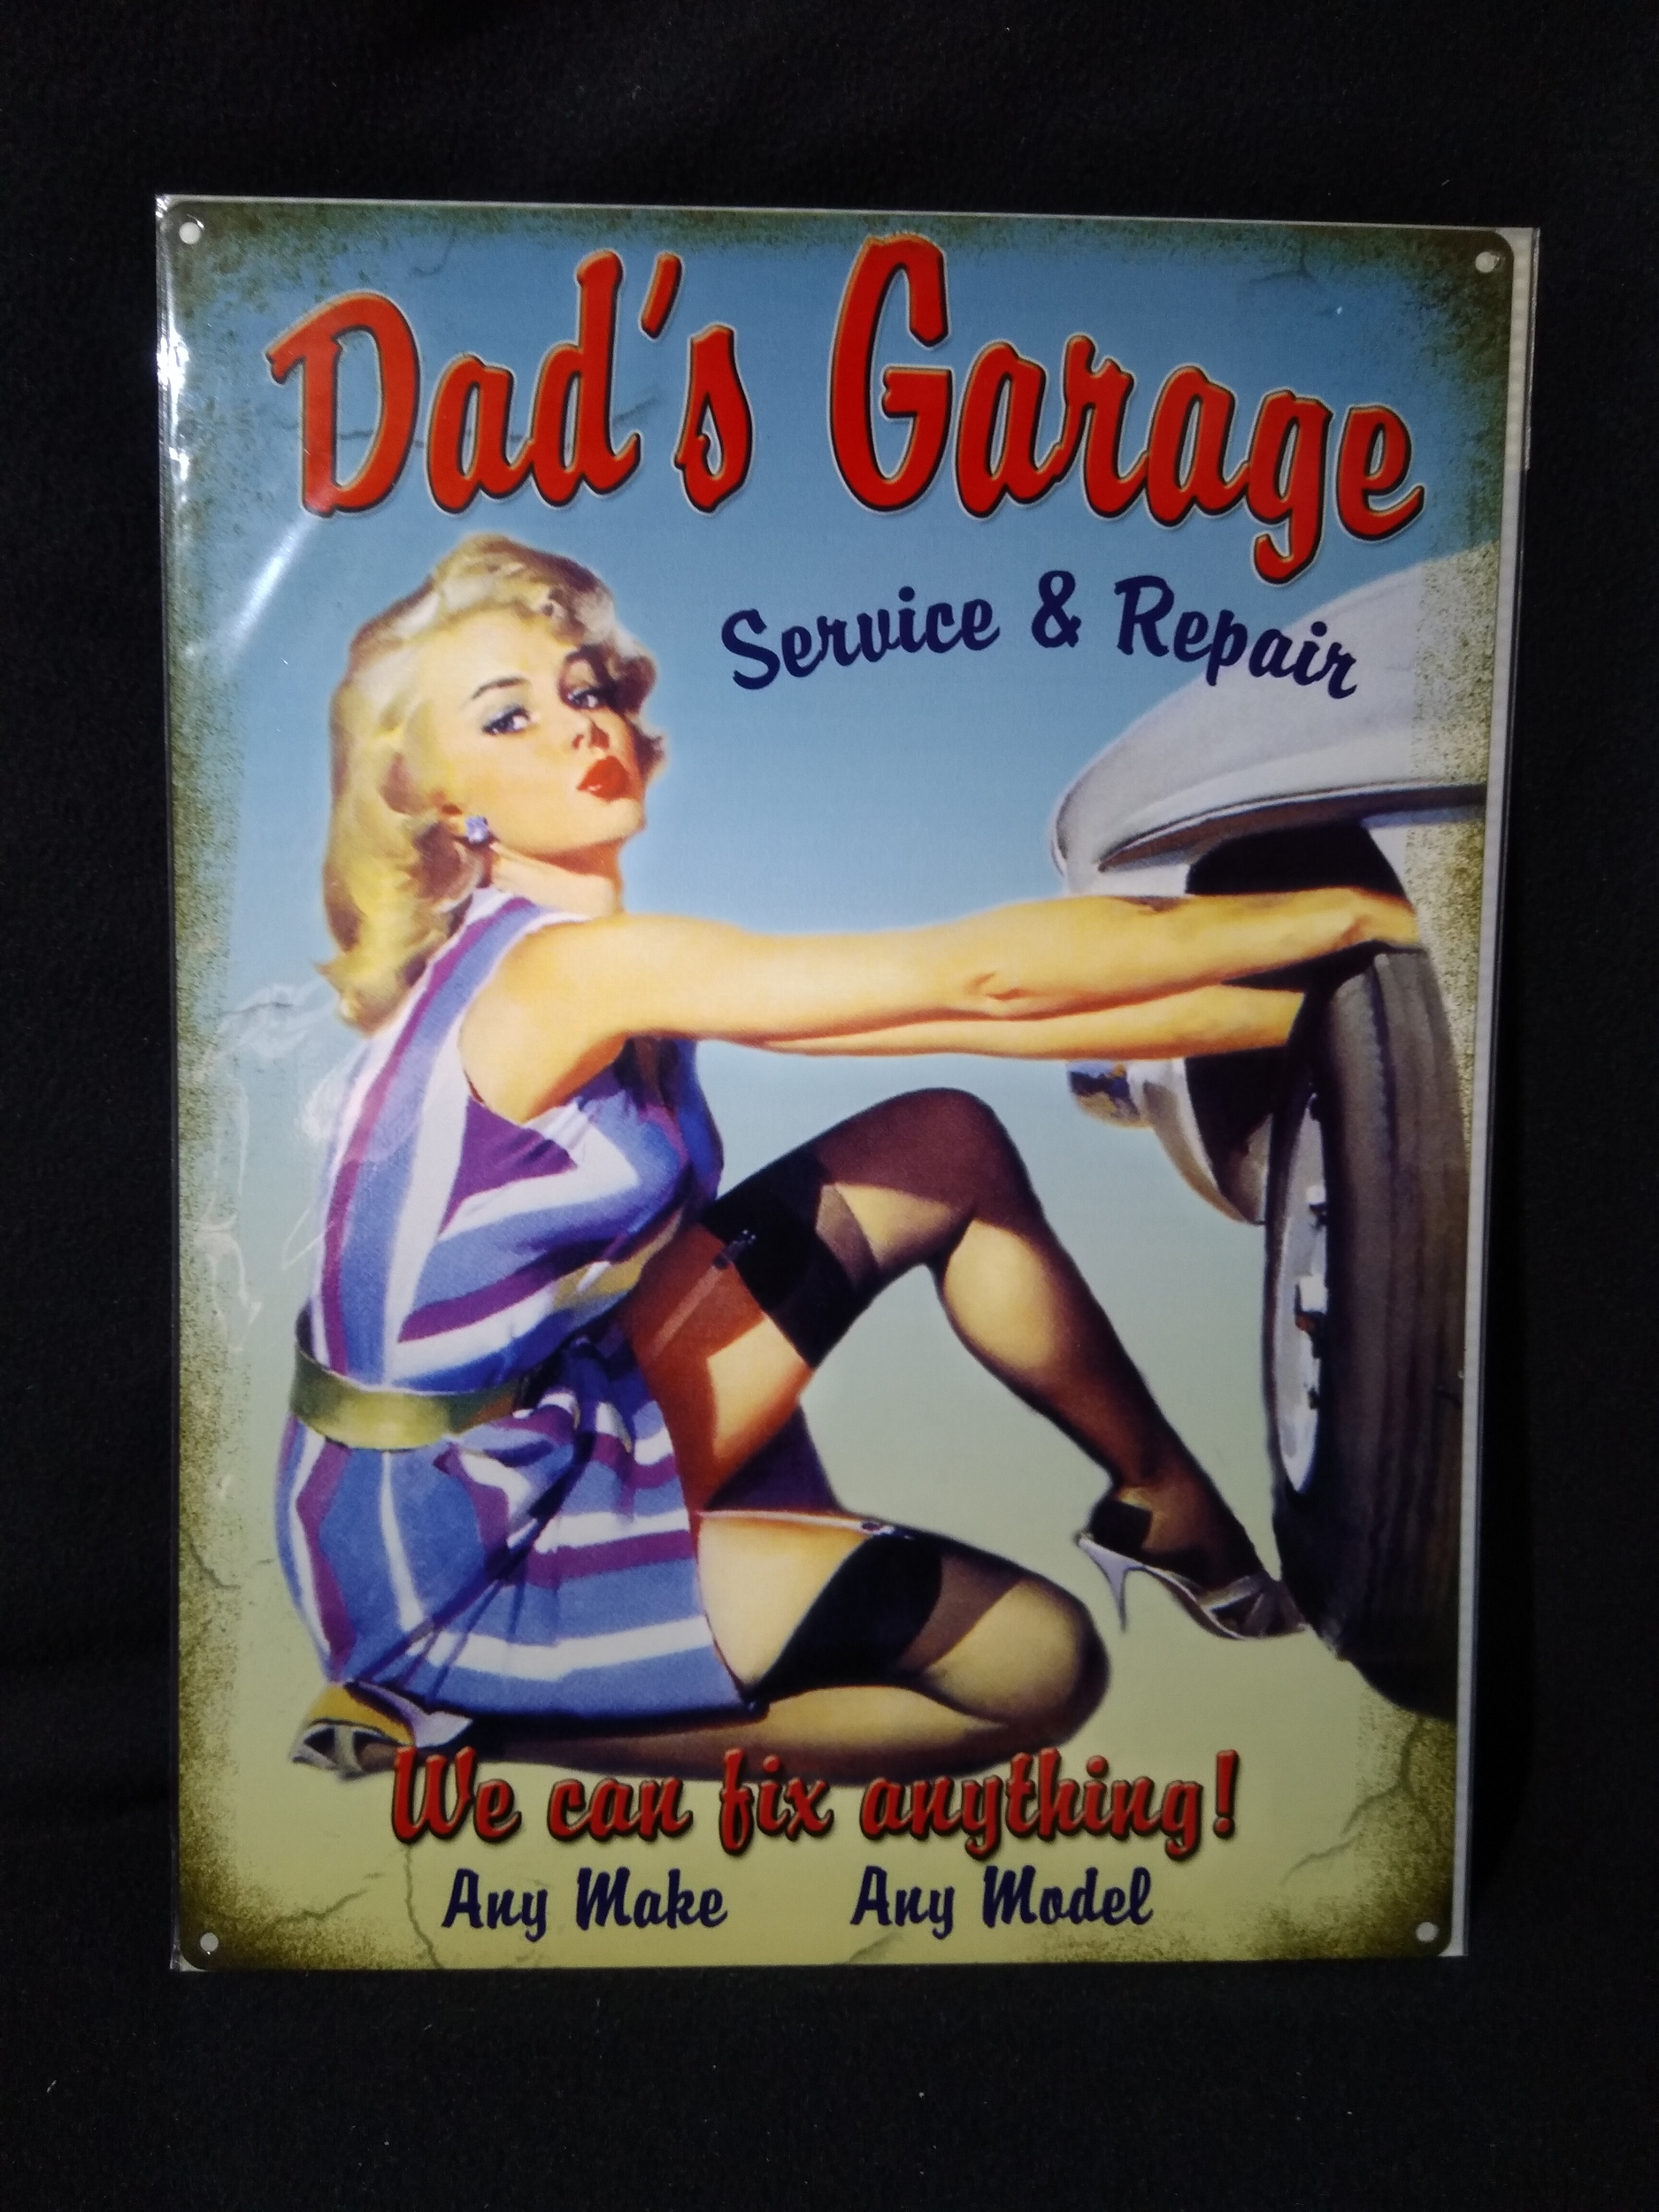 dads garage metal sign plaque